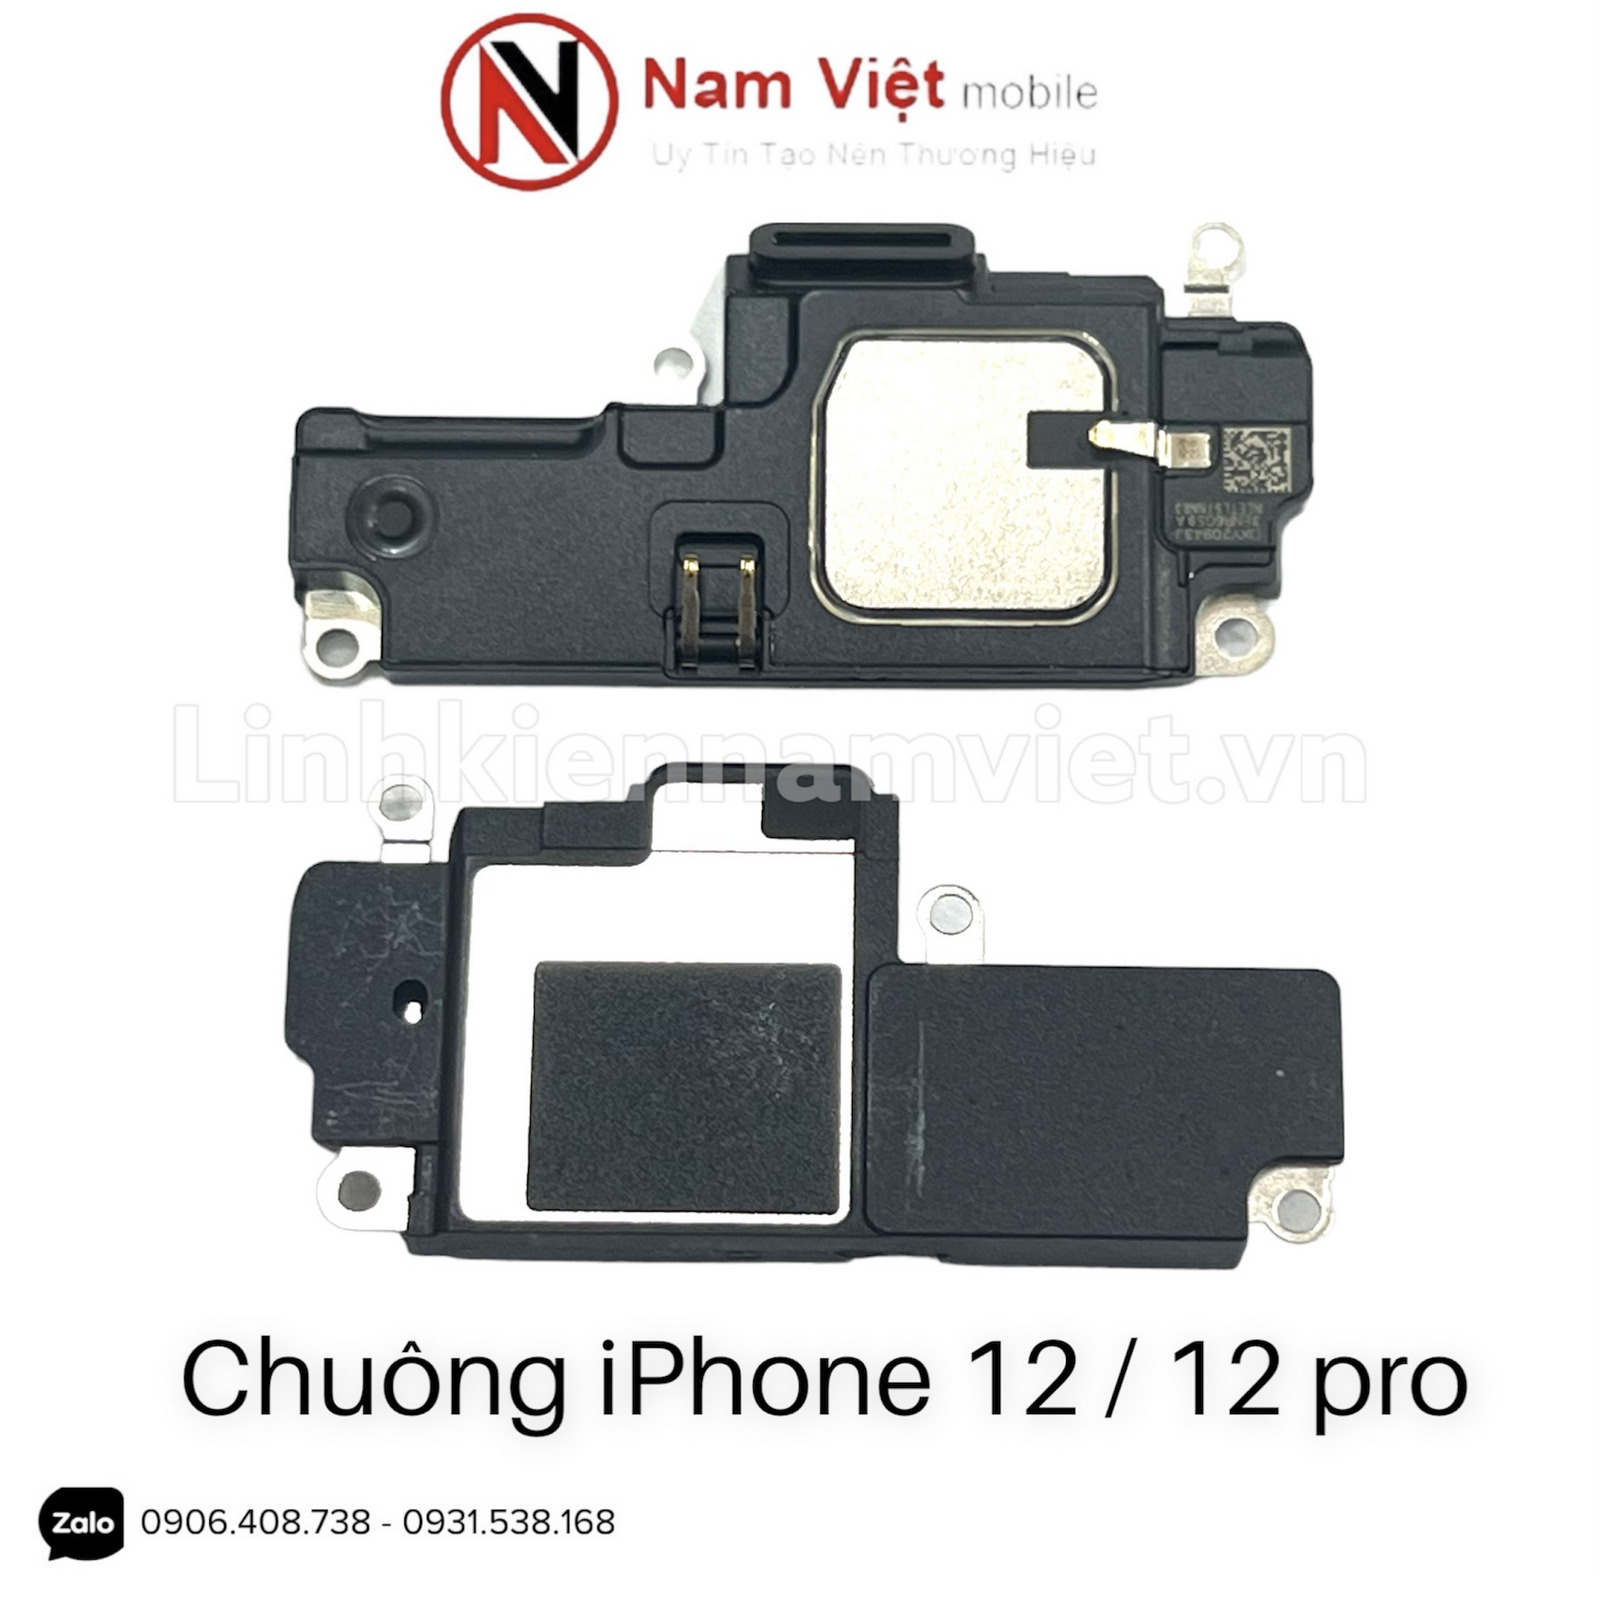 Chuong-iPhone-12-12-pro